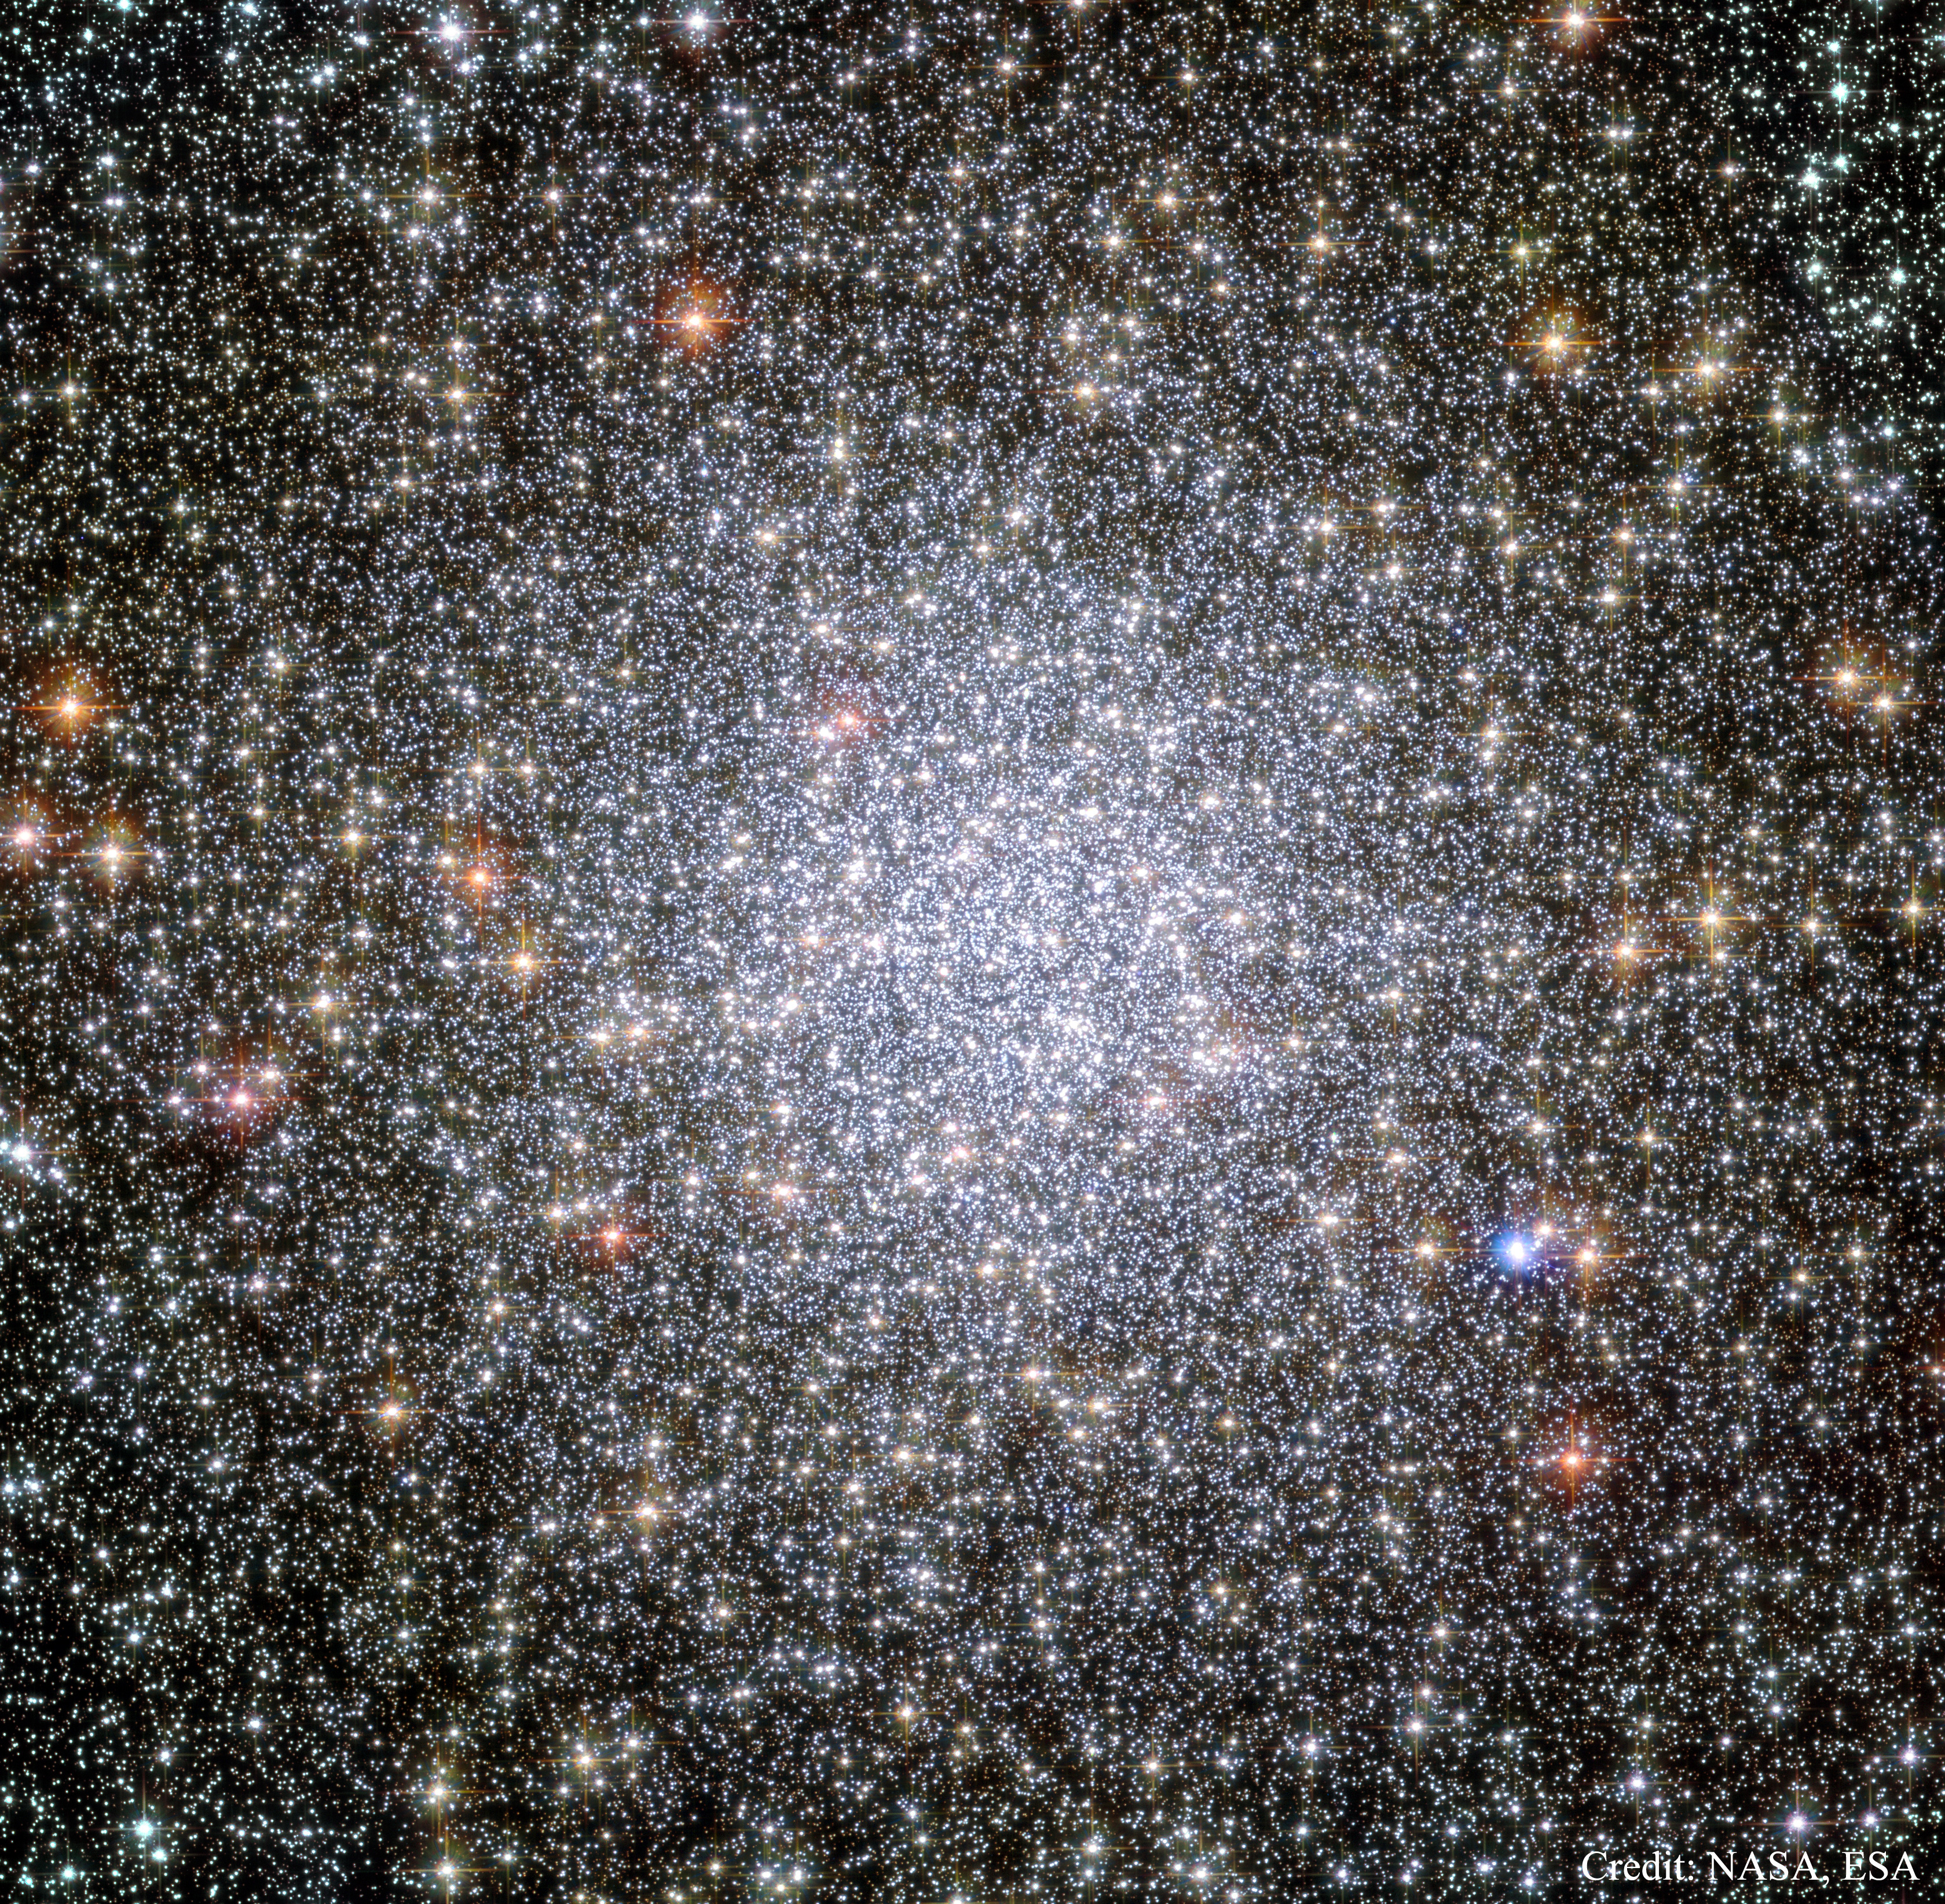 Globular Star Cluster 47 Tuc